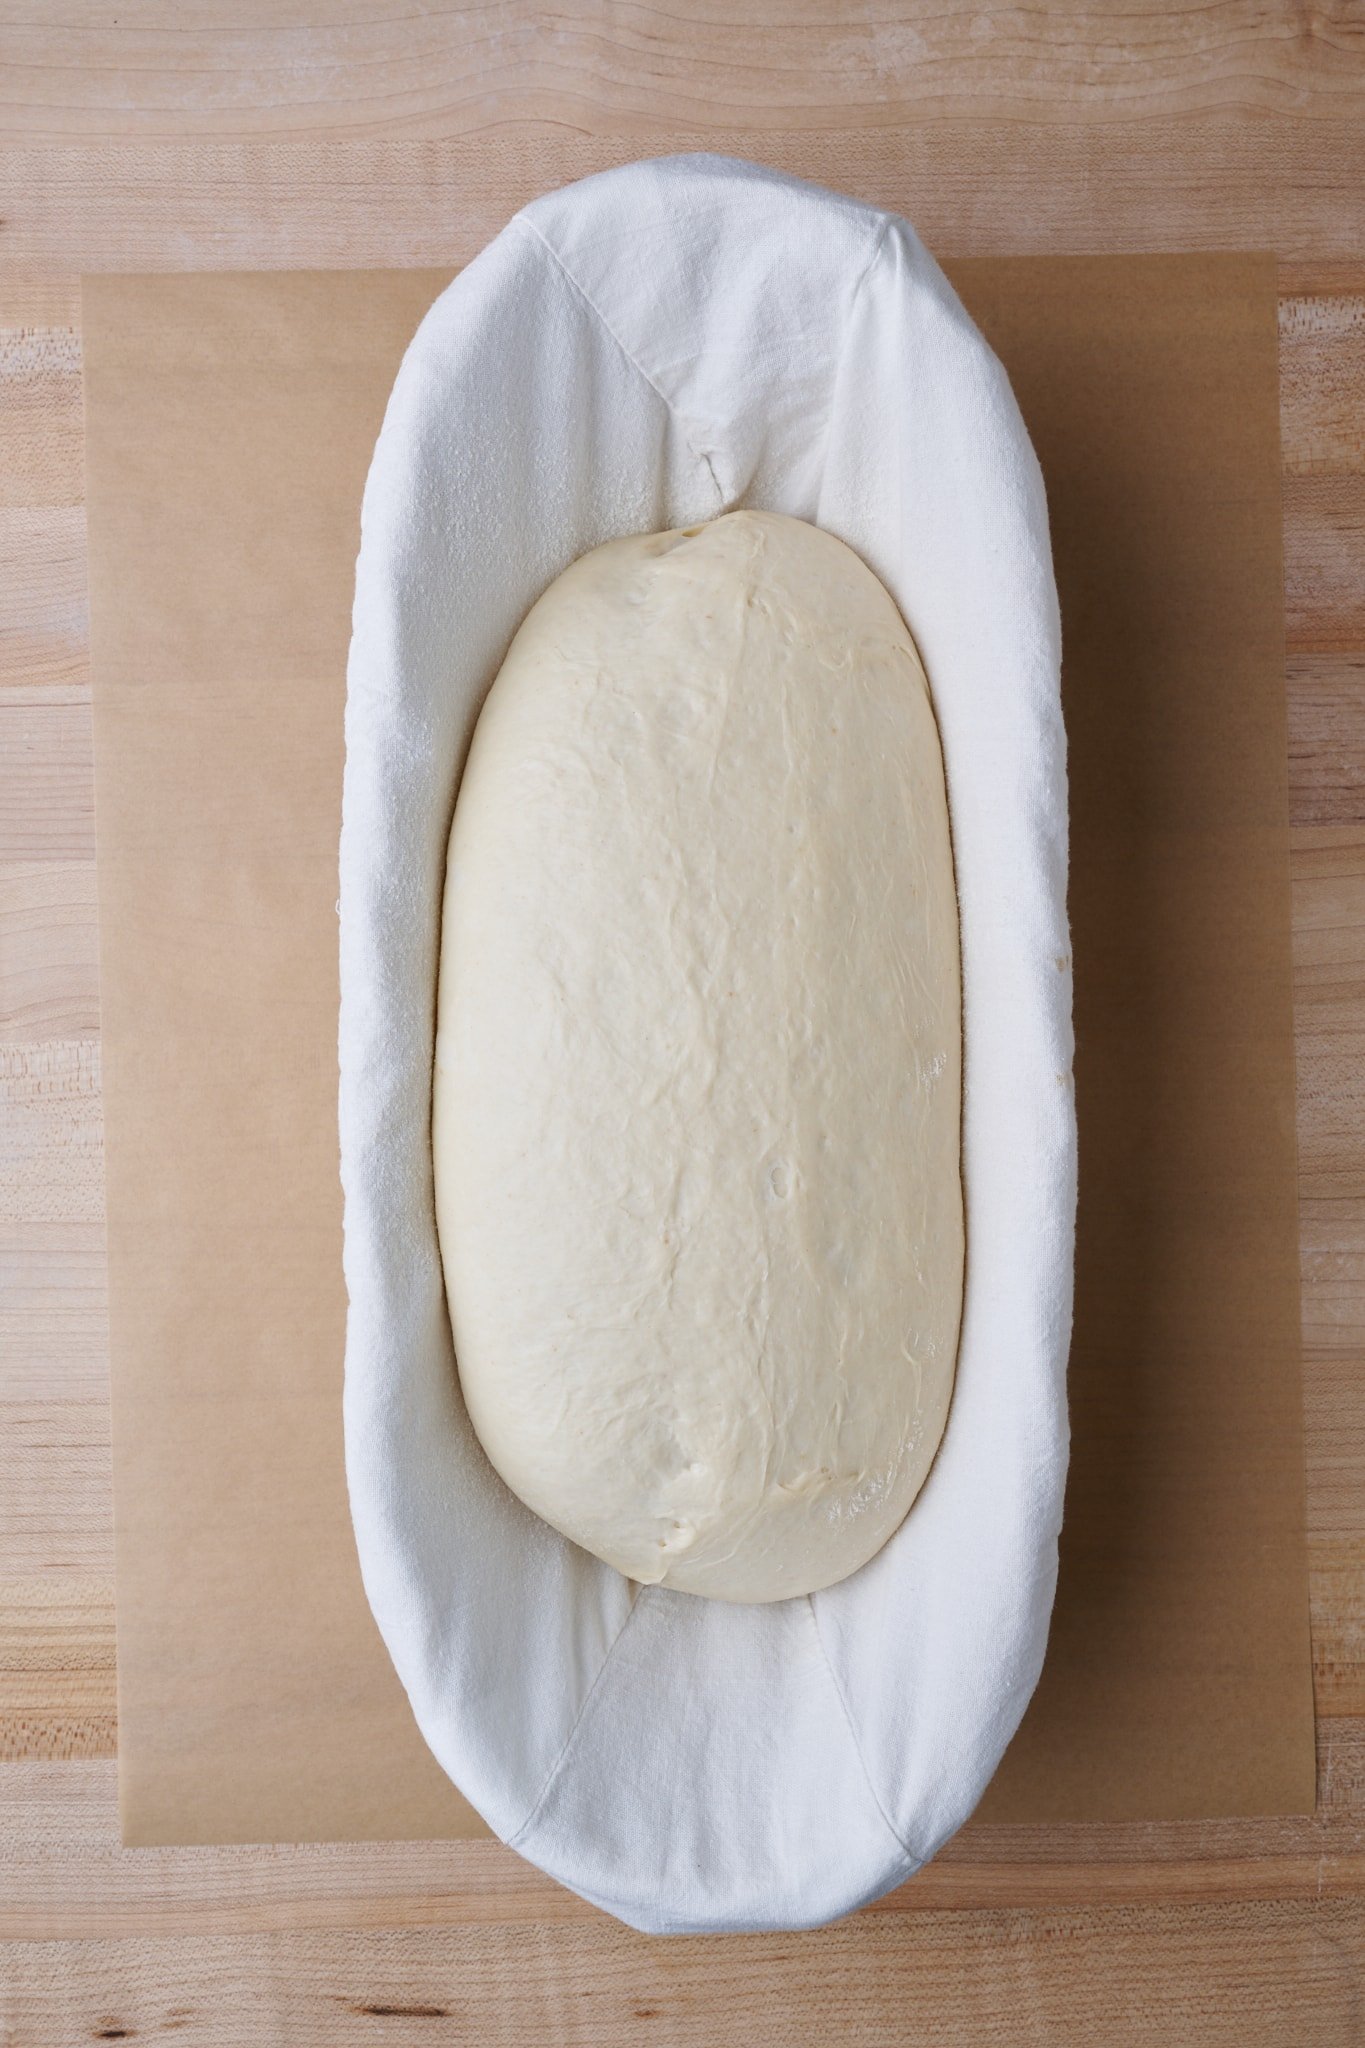 Dough poke test: underproofed dough